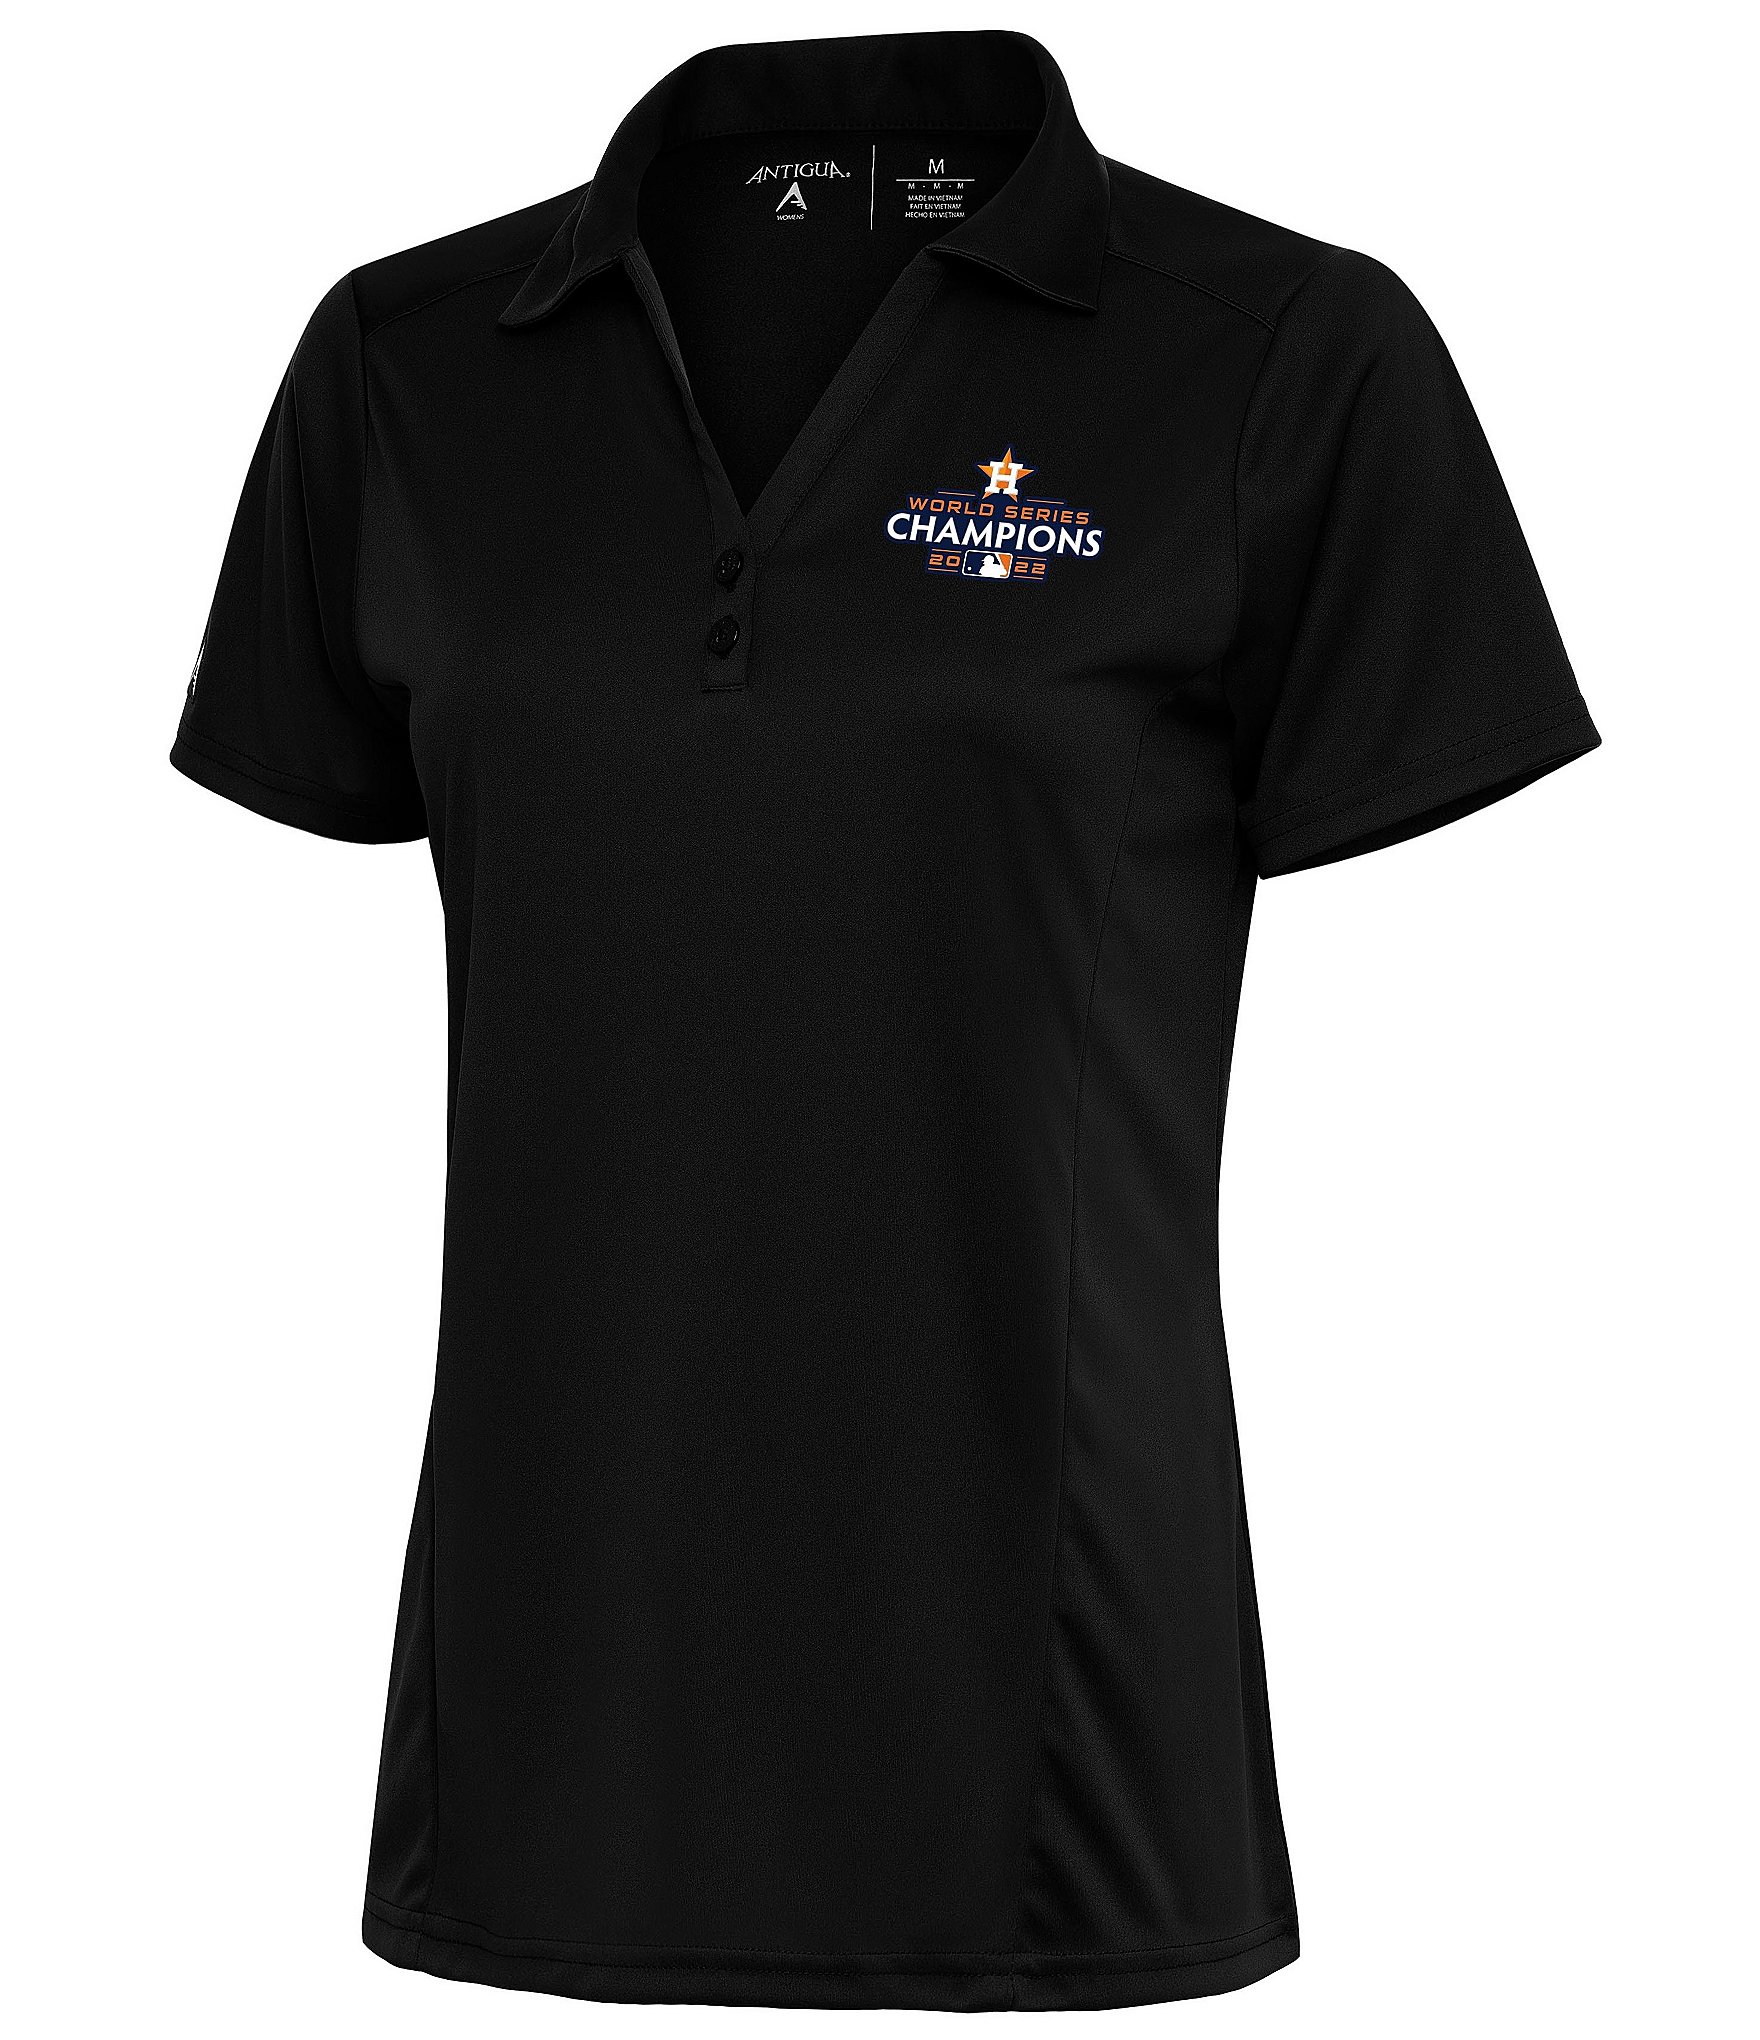 Women's Houston Astros World Championship Shirt — Trudy's Hallmark